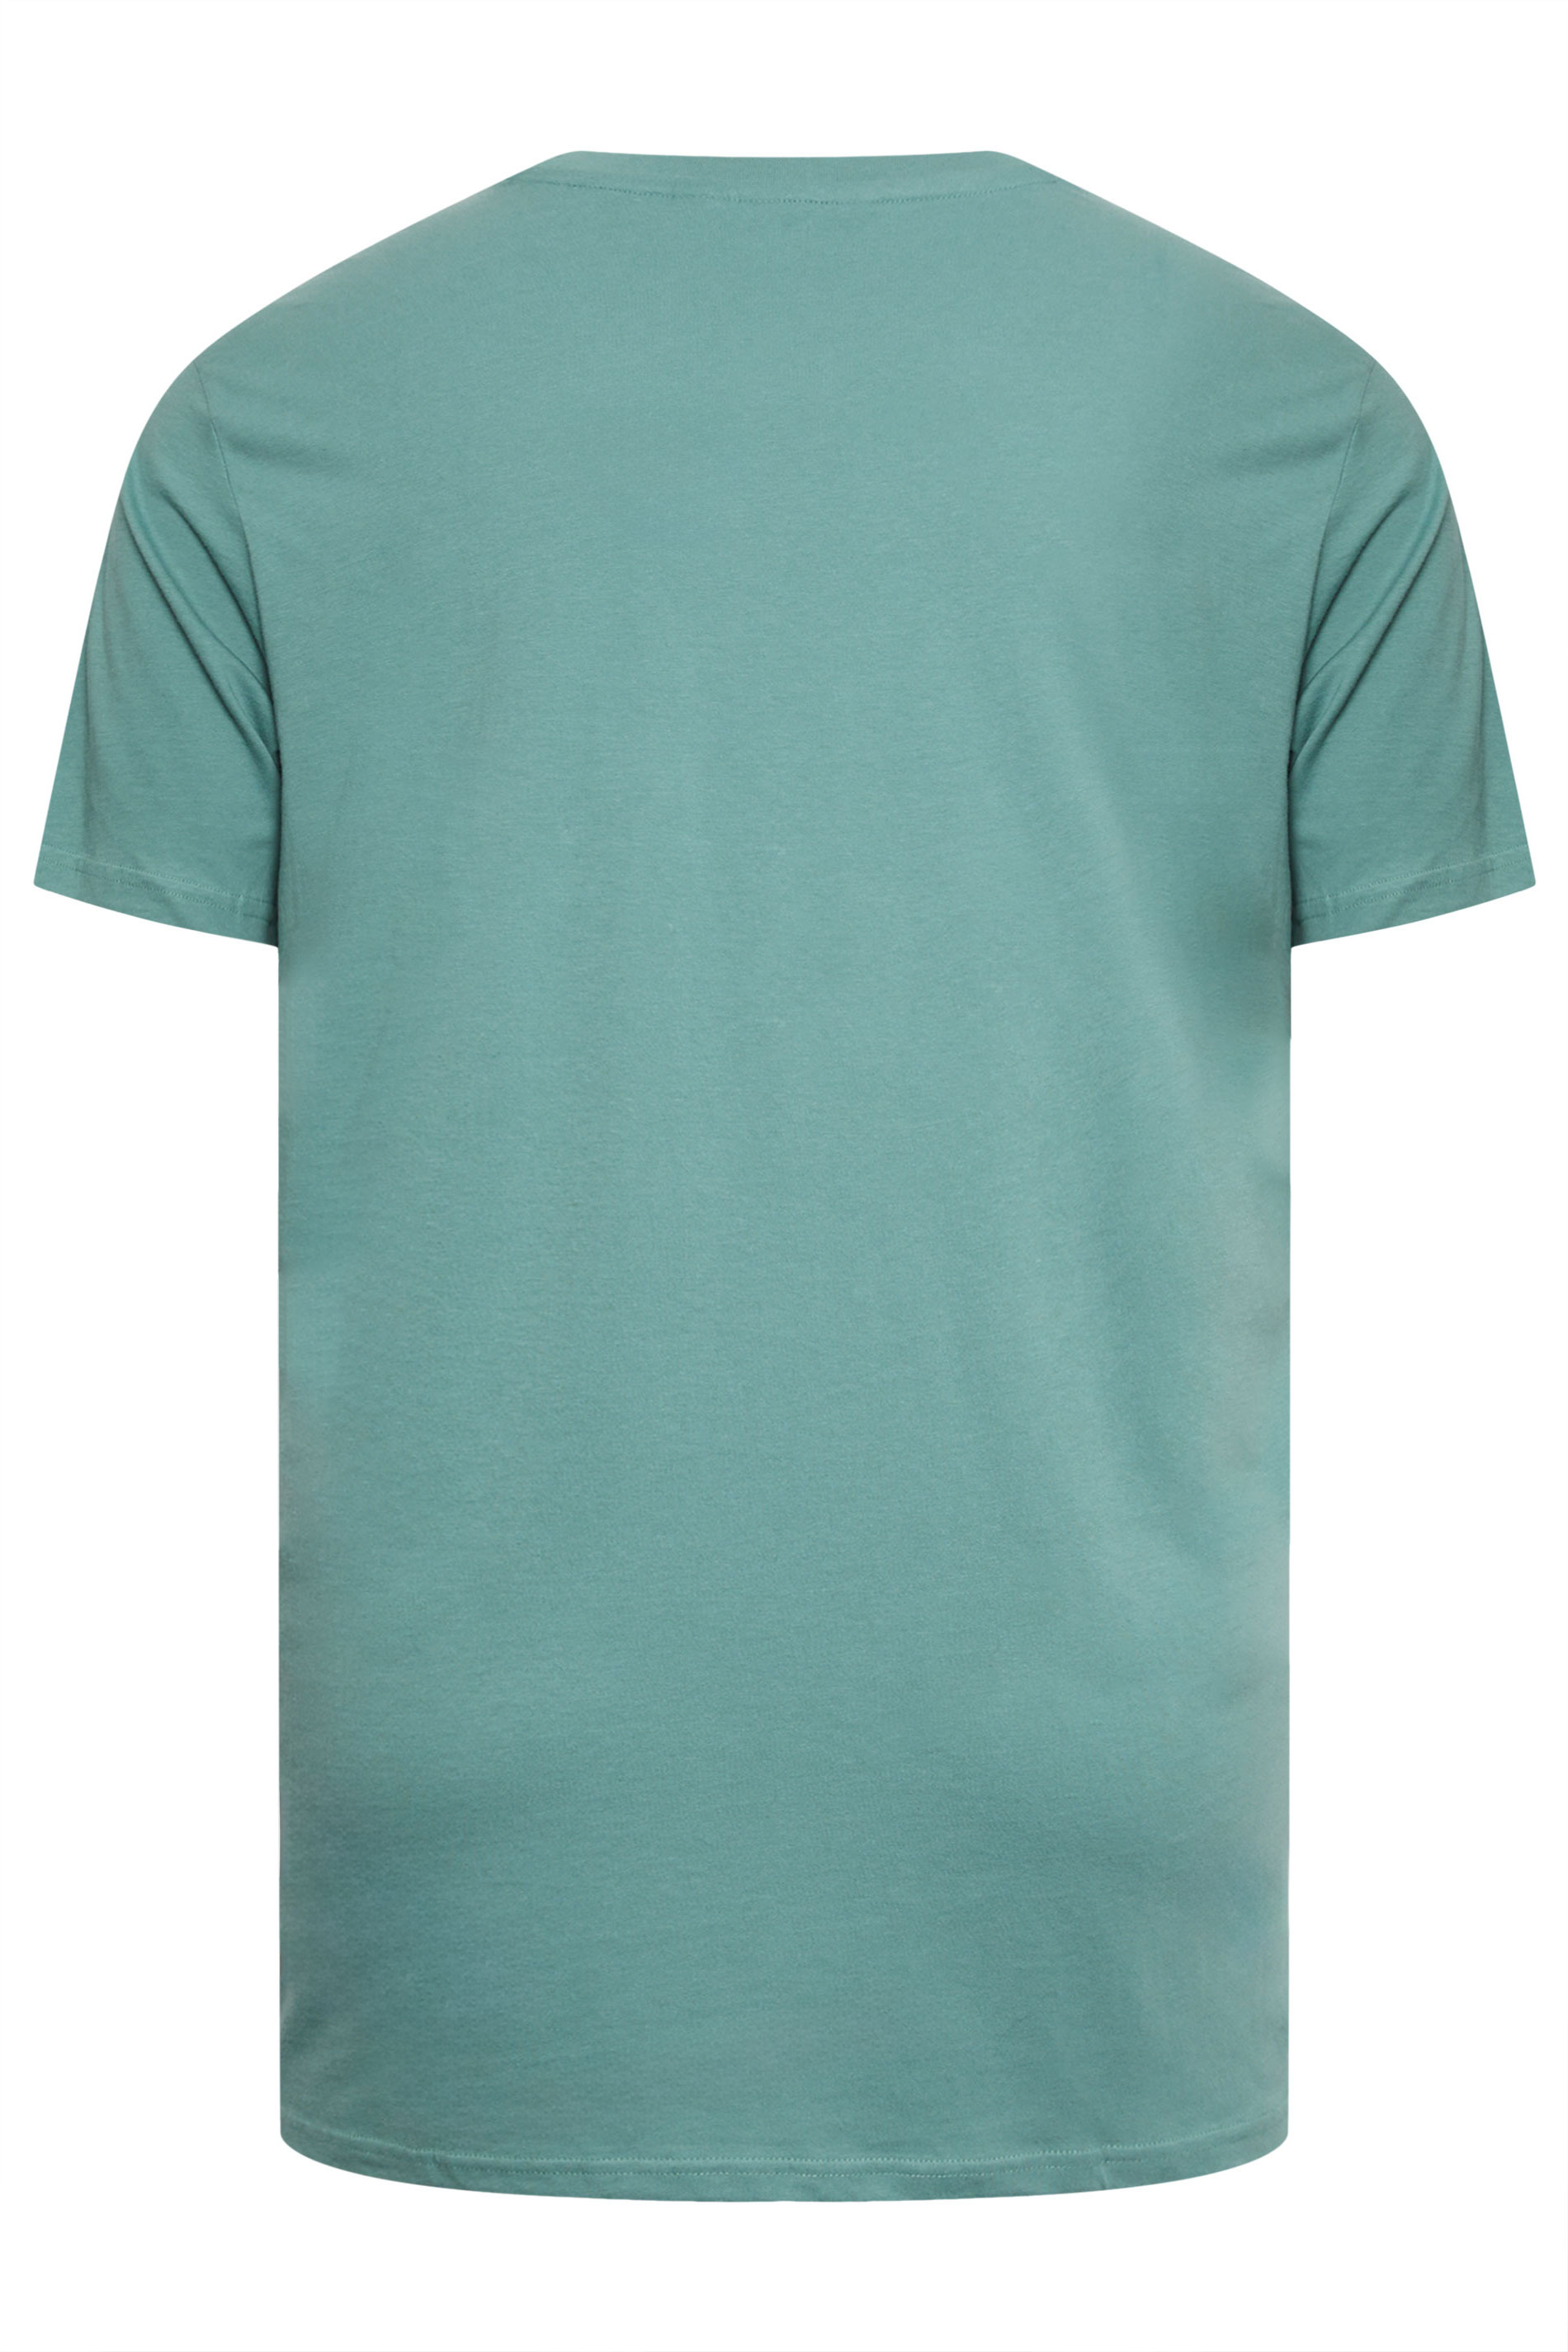 BEN SHERMAN Big & Tall Teal Blue Core Stripe T-Shirt | BadRhino 3